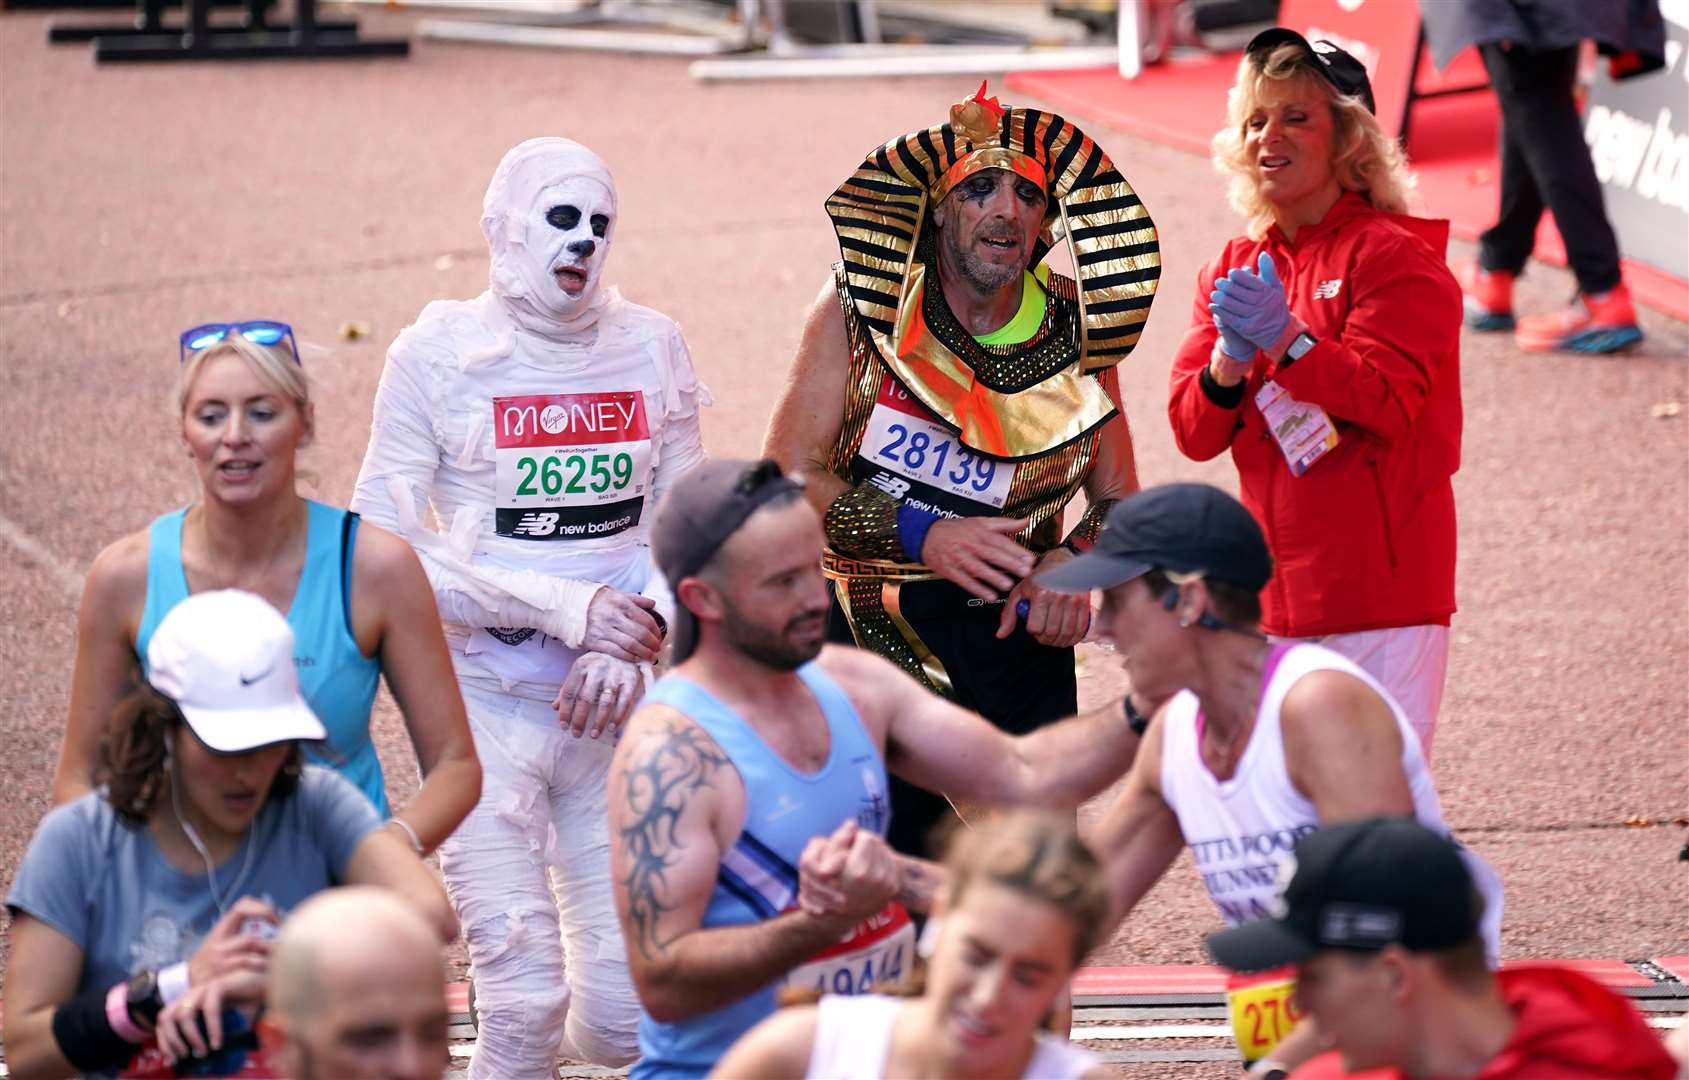 Runners in fancy dress after finishing the Virgin Money London Marathon (Yui Mok/PA)